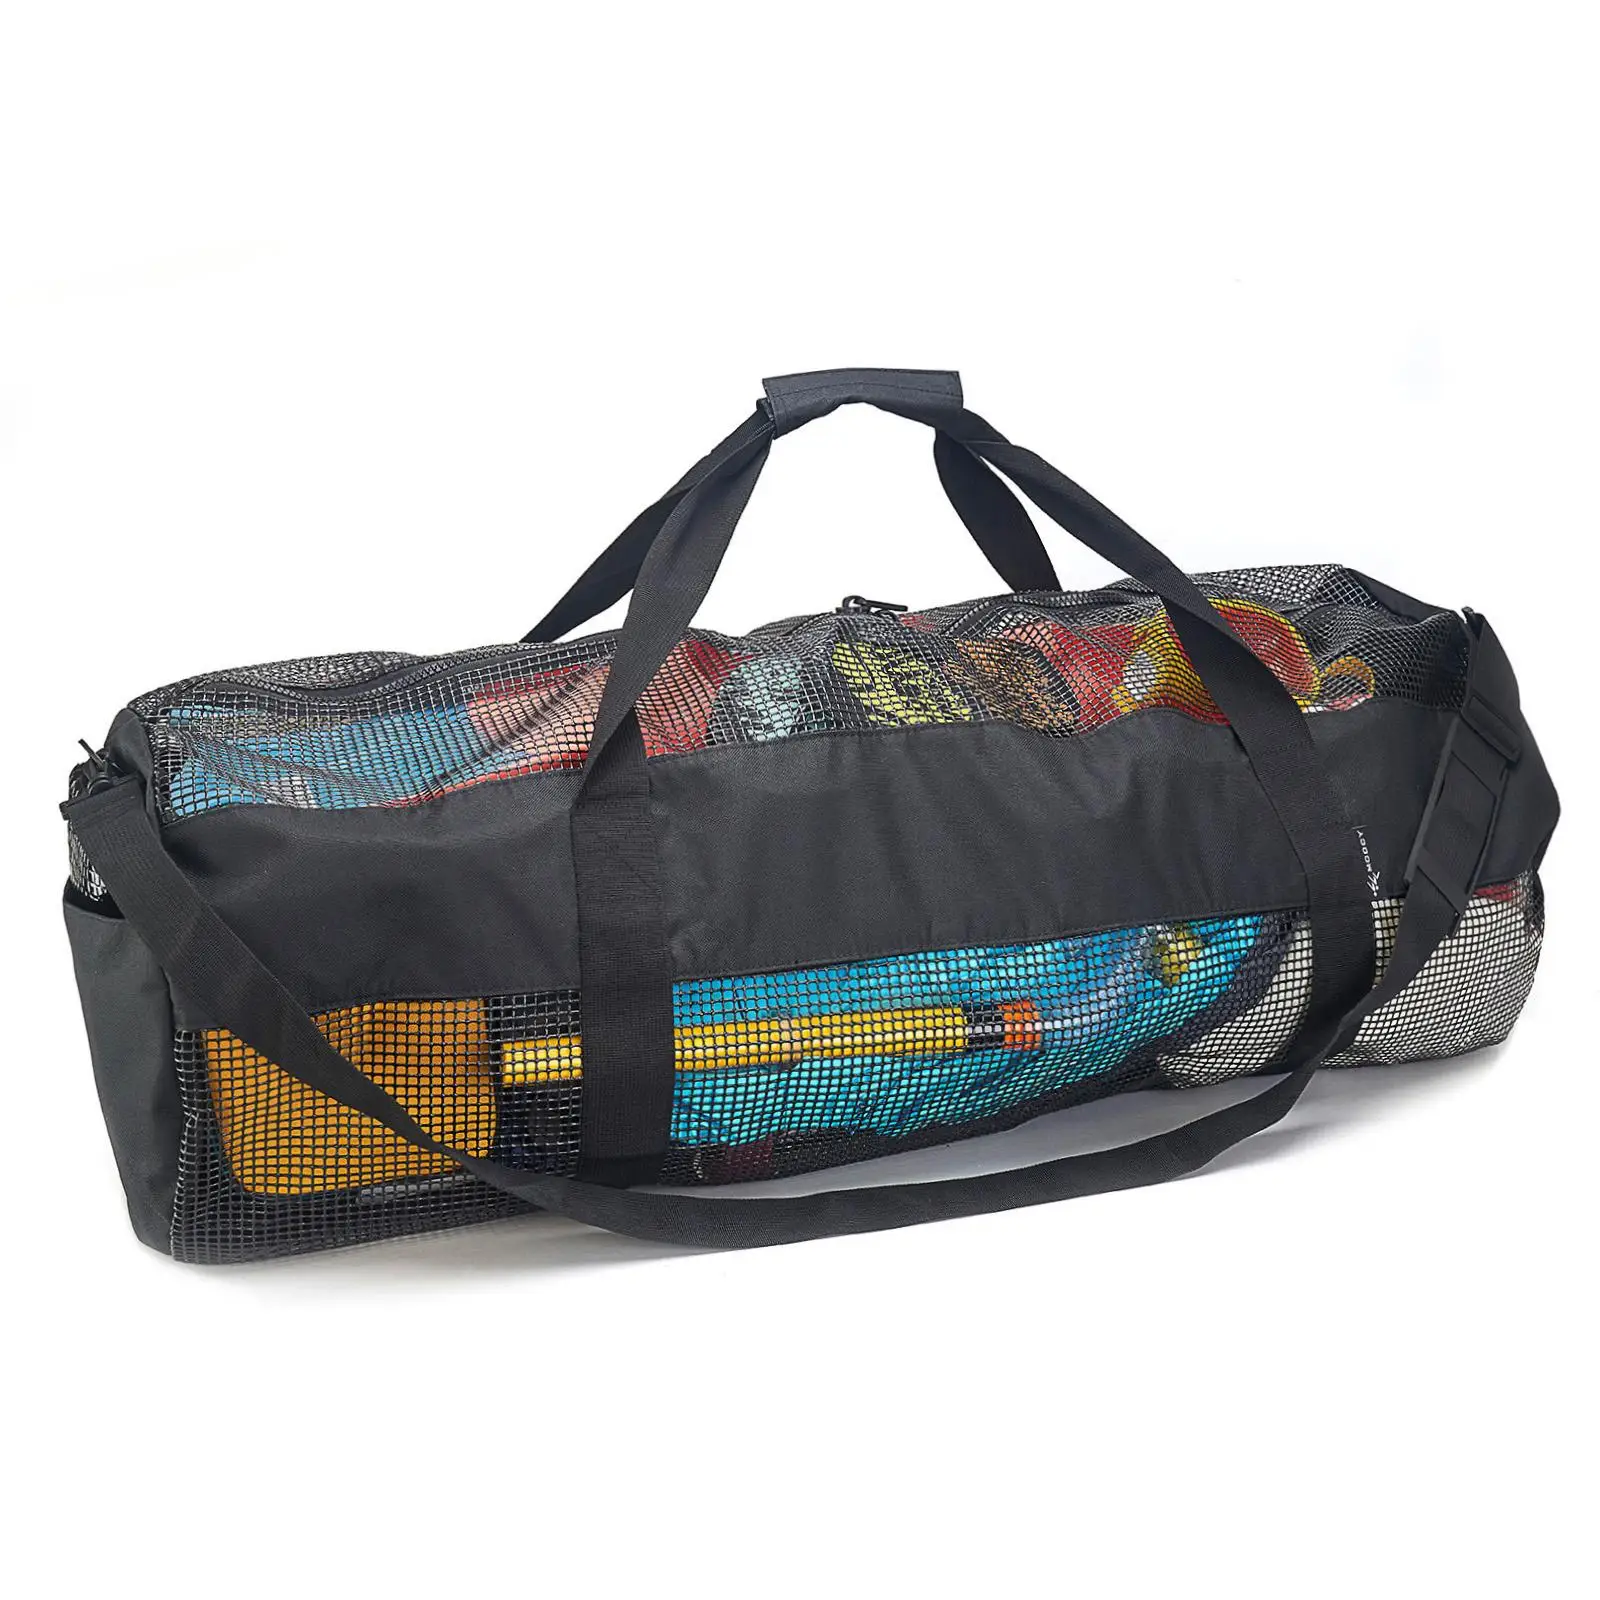 Mesh Duffel Bag Oxford Cloth Handbag Organizer for Family Trip Home Organization